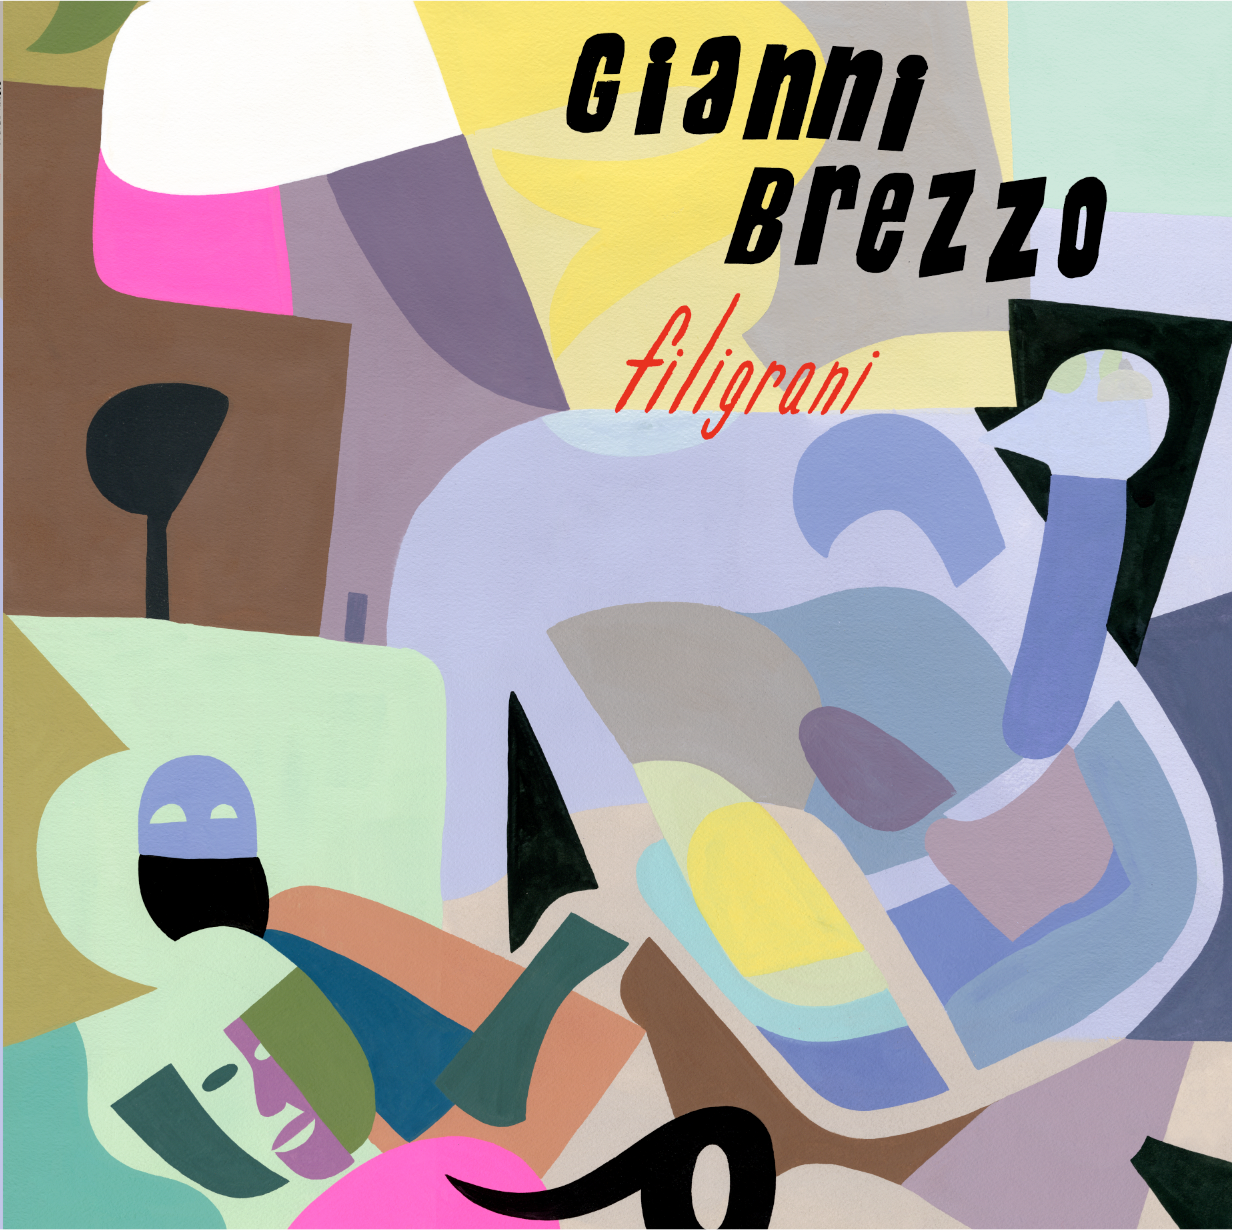 Gianni Brezzo's latest offering, Filigrani, is jazz lusciousness